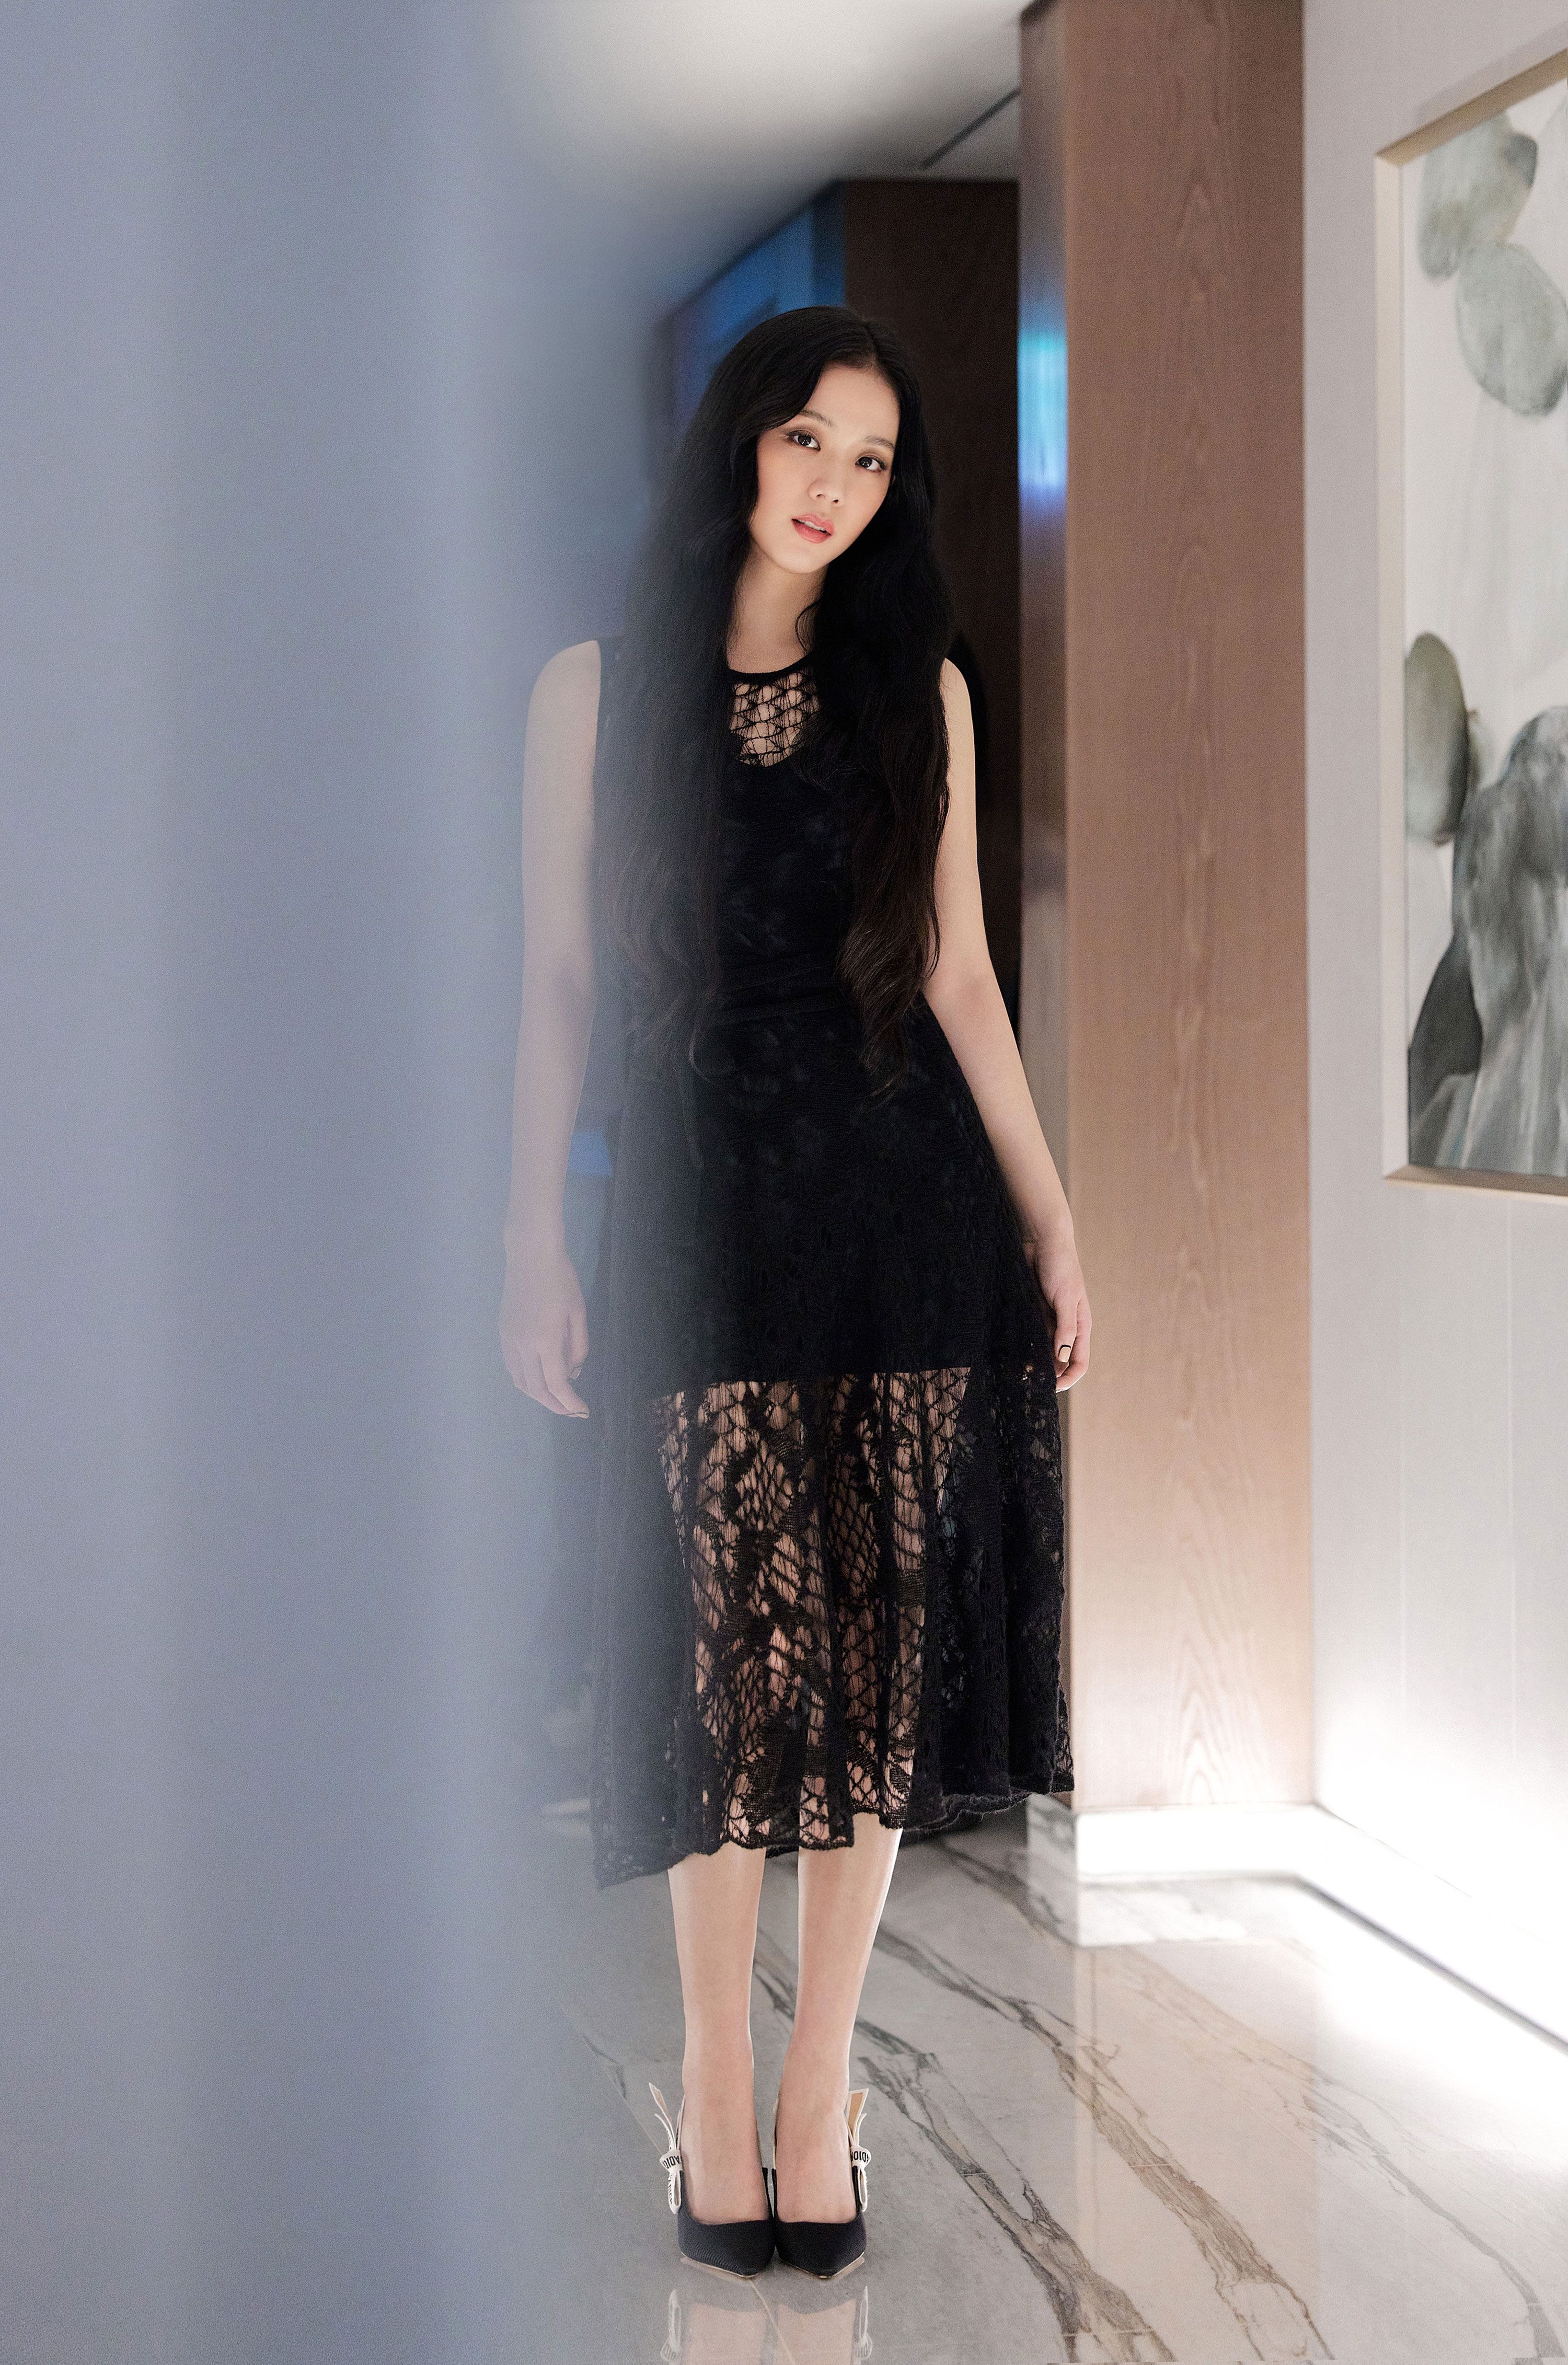 BLACKPINKs Jisoo Outdoes A Dior Runway Model In A Greek Goddess Dress   Koreaboo